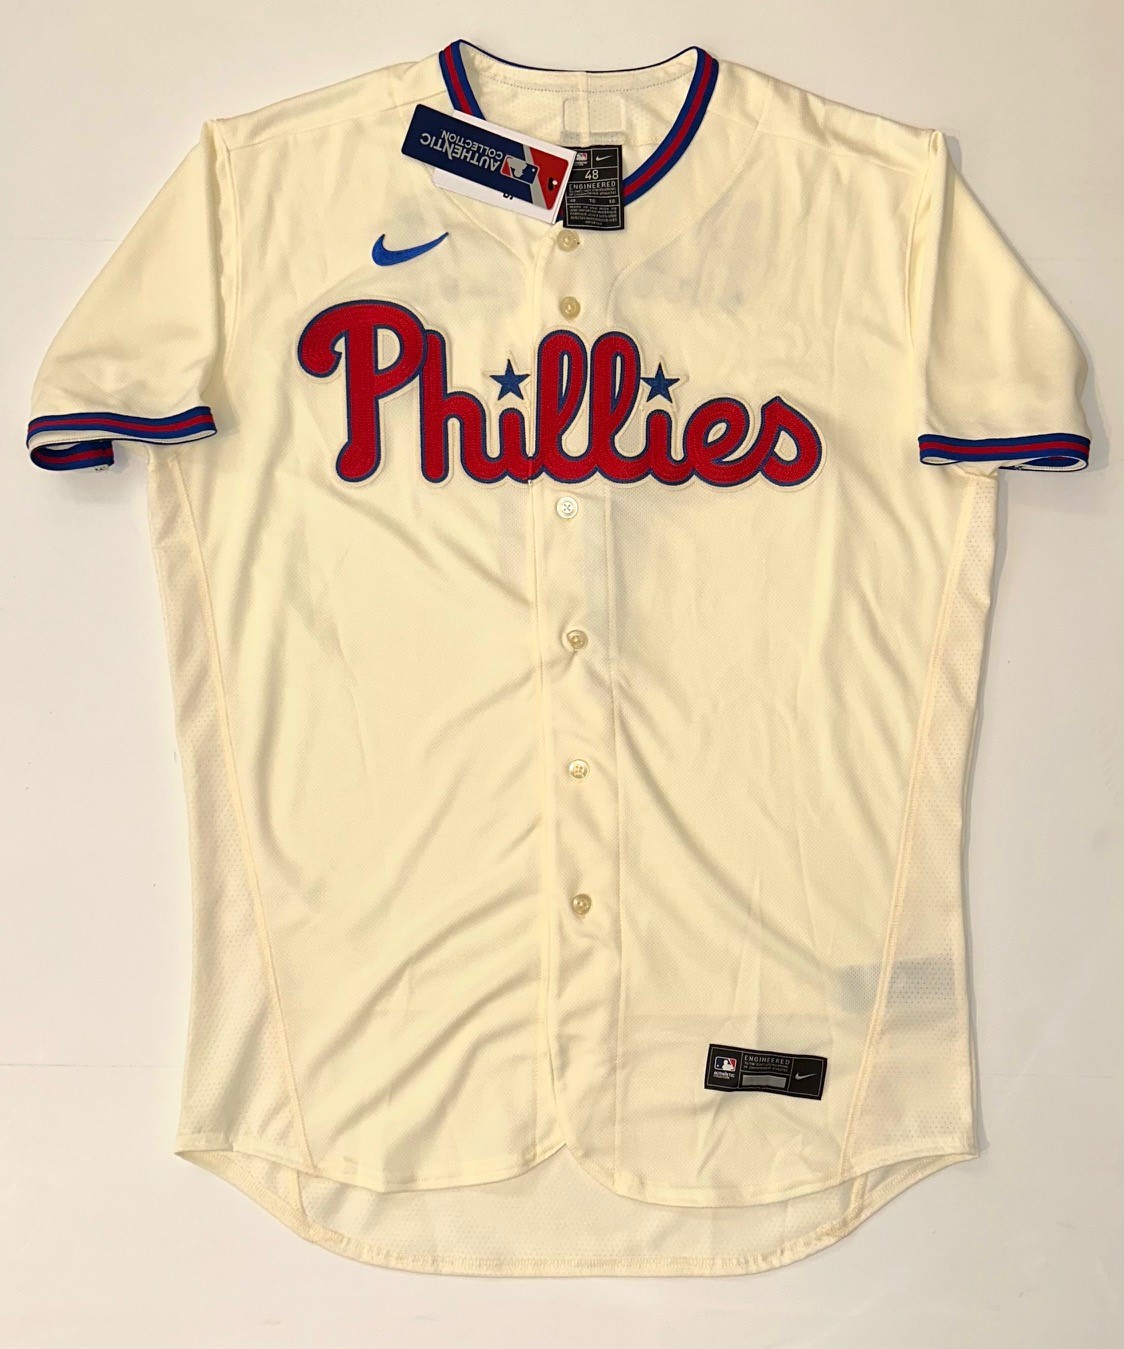 Bryce Harper Autographed Philadelphia Phillies Authentic Jersey (alternate)  - The Autograph Source